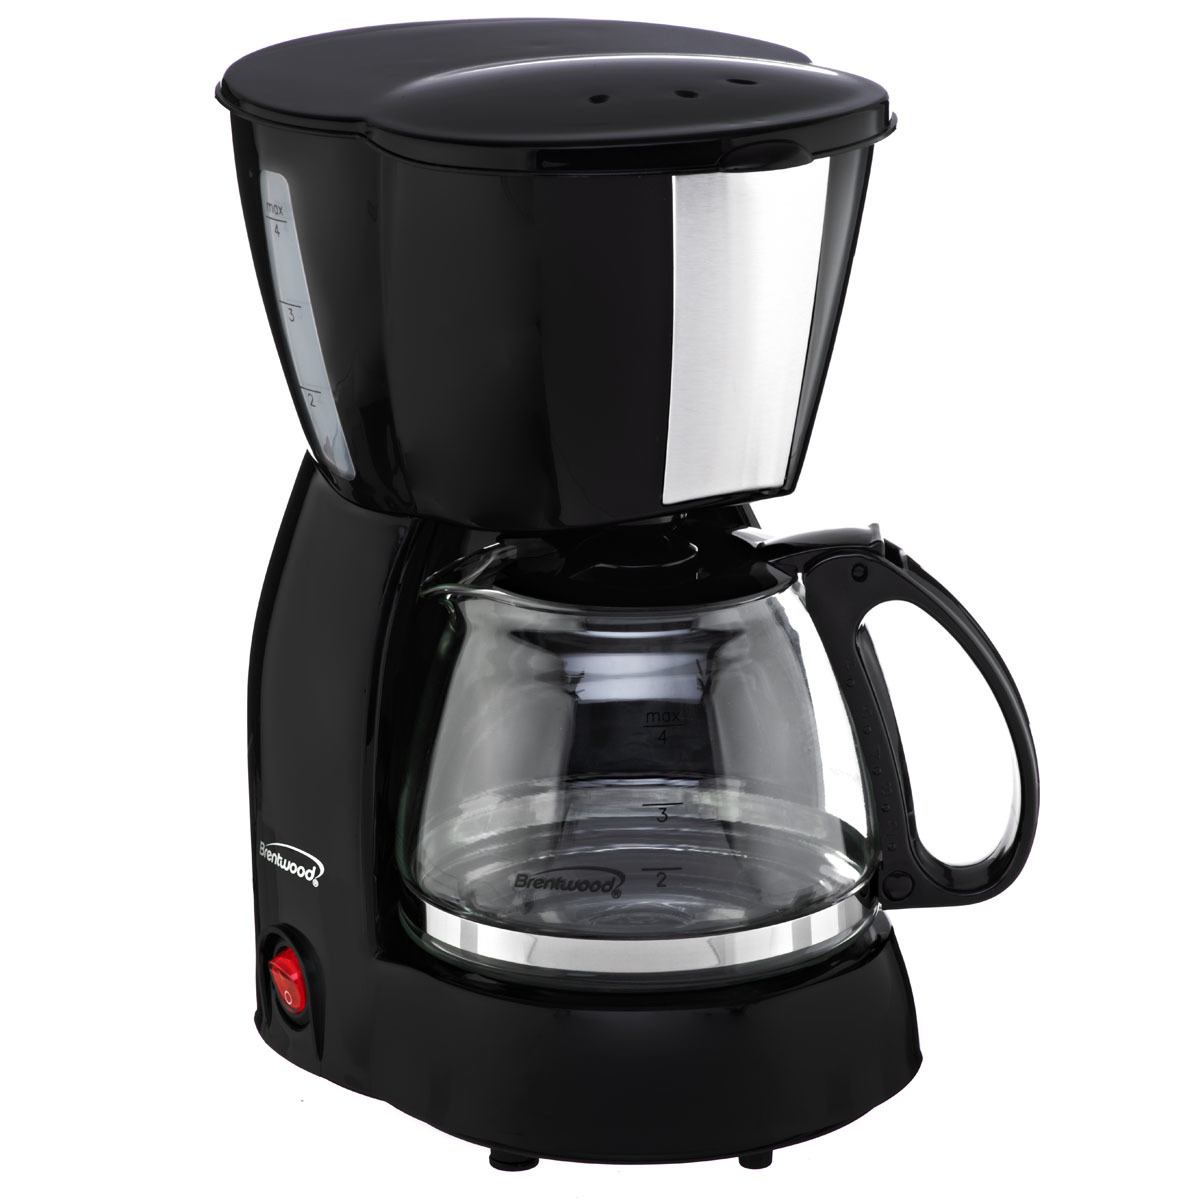 Premium 4-Cup Coffee Maker